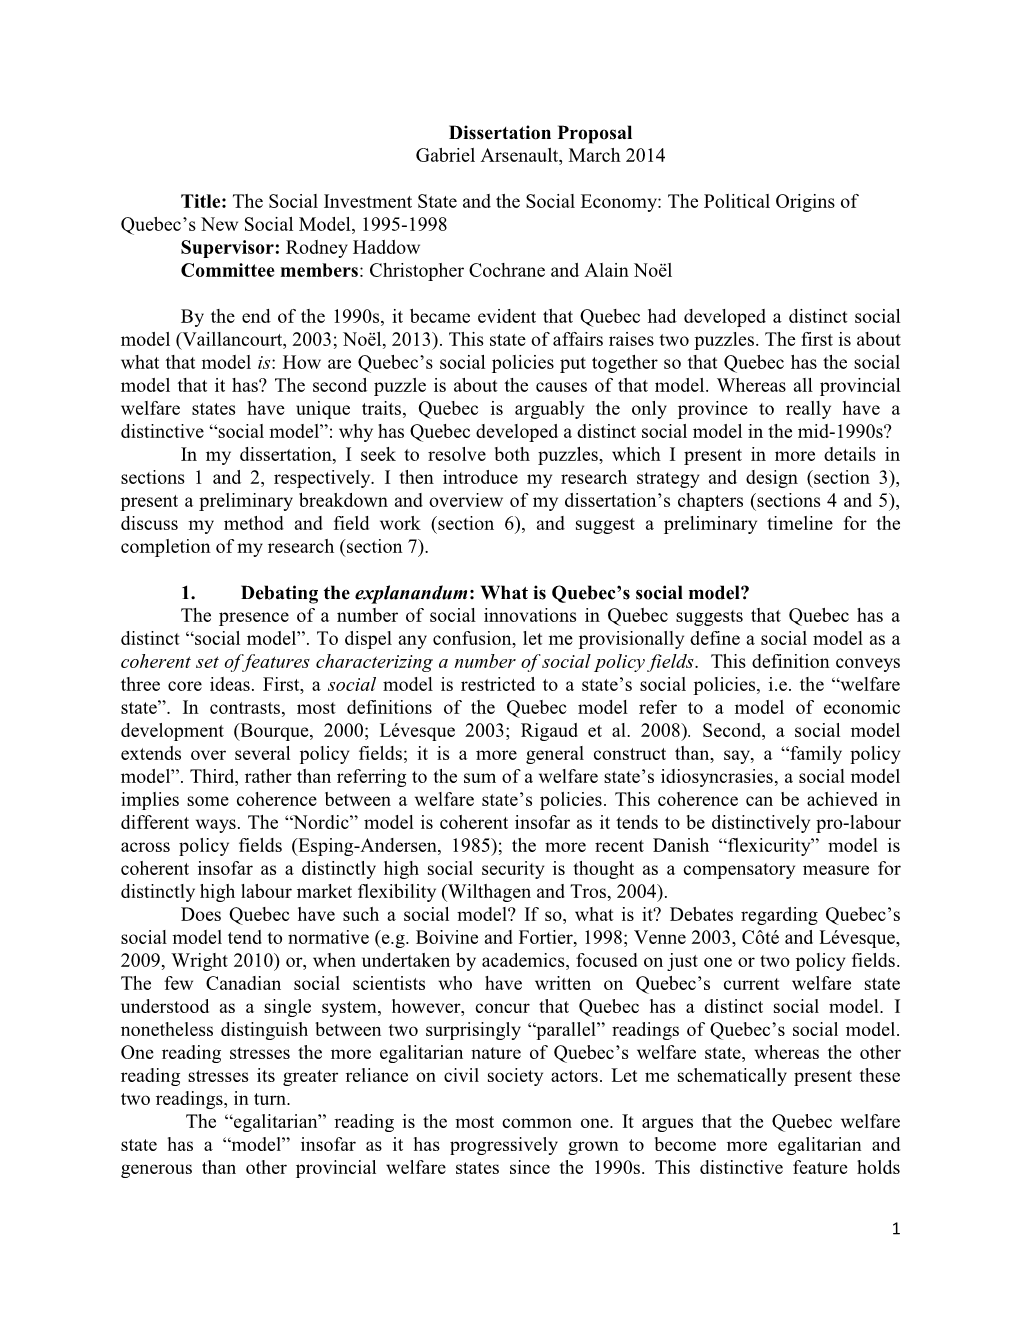 Dissertation Proposal Gabriel Arsenault, March 2014